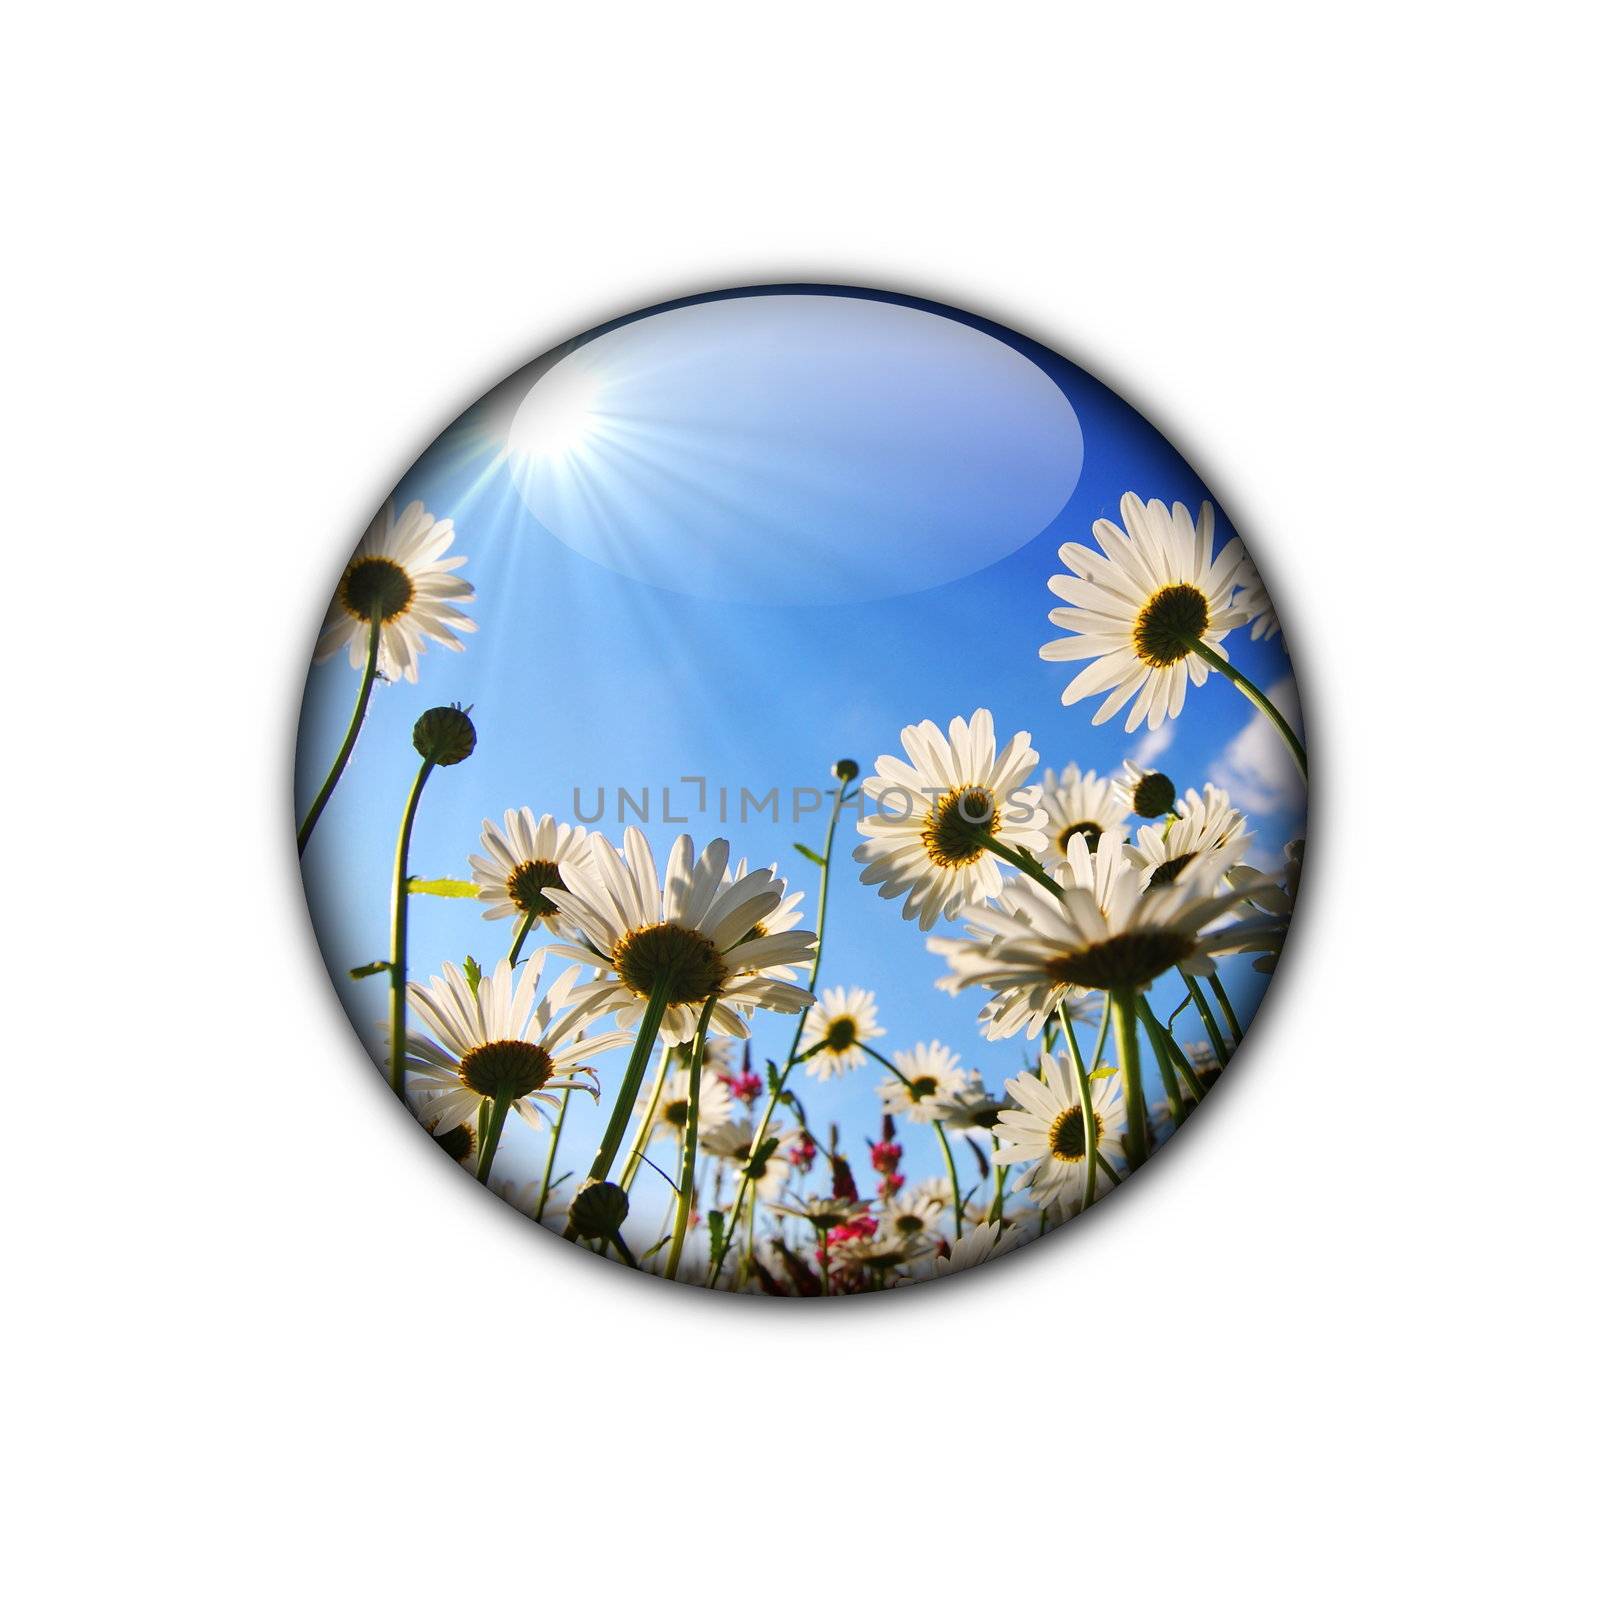 flower button for internet web site showing summer concept